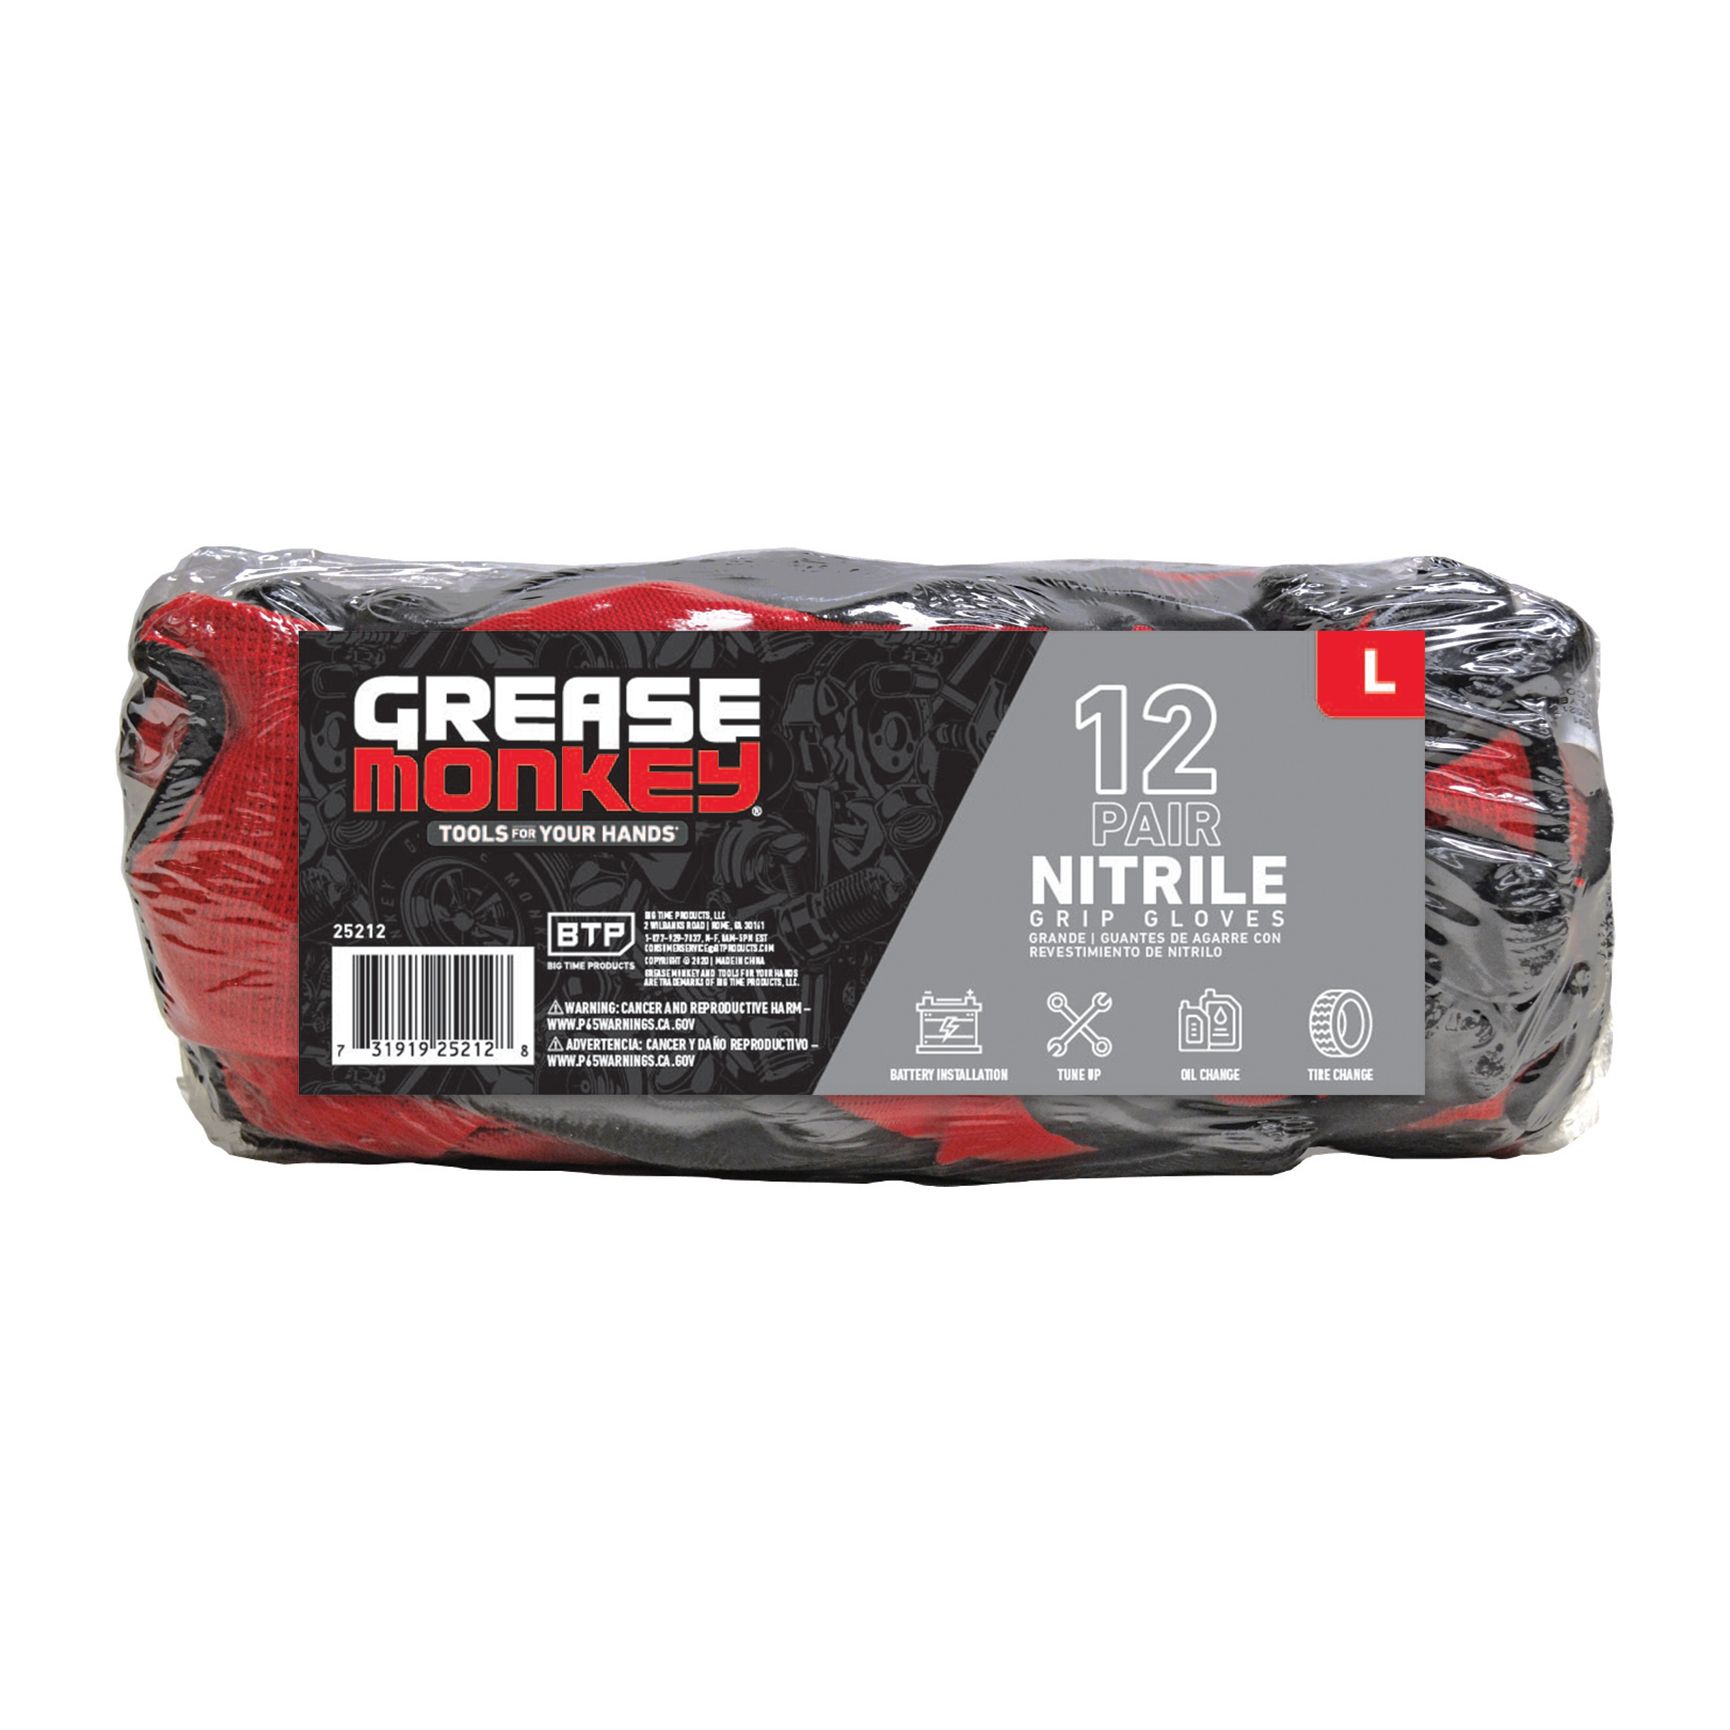 Grease Monkey Nitrile-Coated Work Gloves, 12 pk. - Assorted